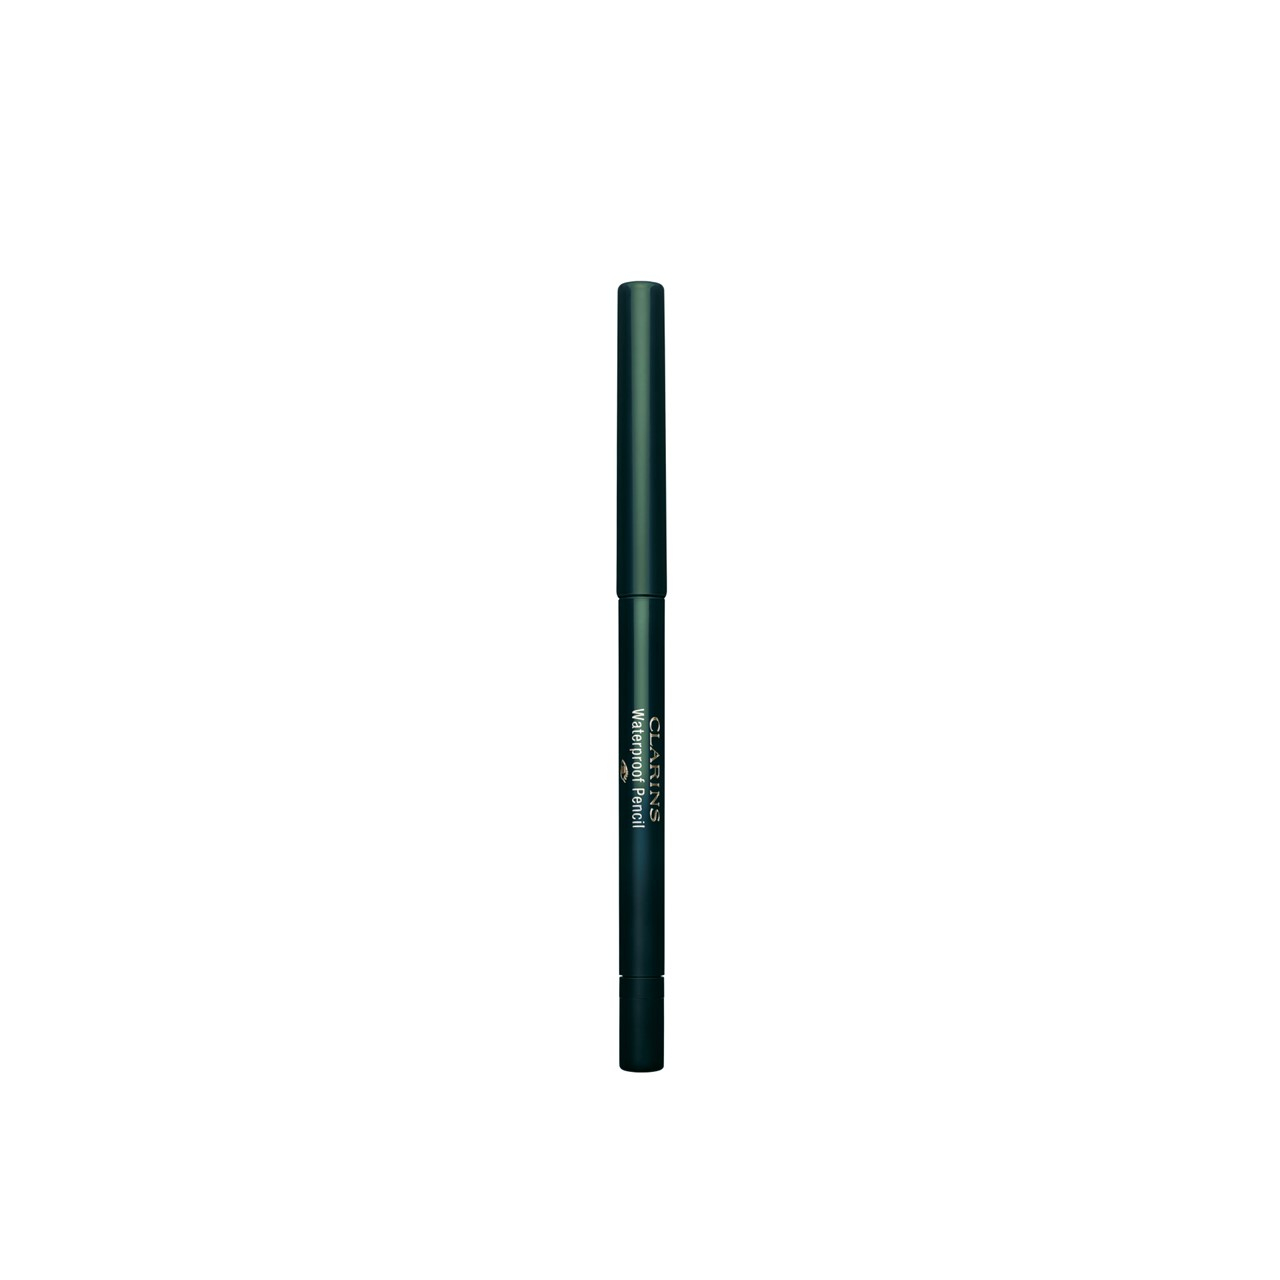 Clarins Waterproof Pencil Long-Lasting Eyeliner 05 Forest 0.29g (0.01oz)